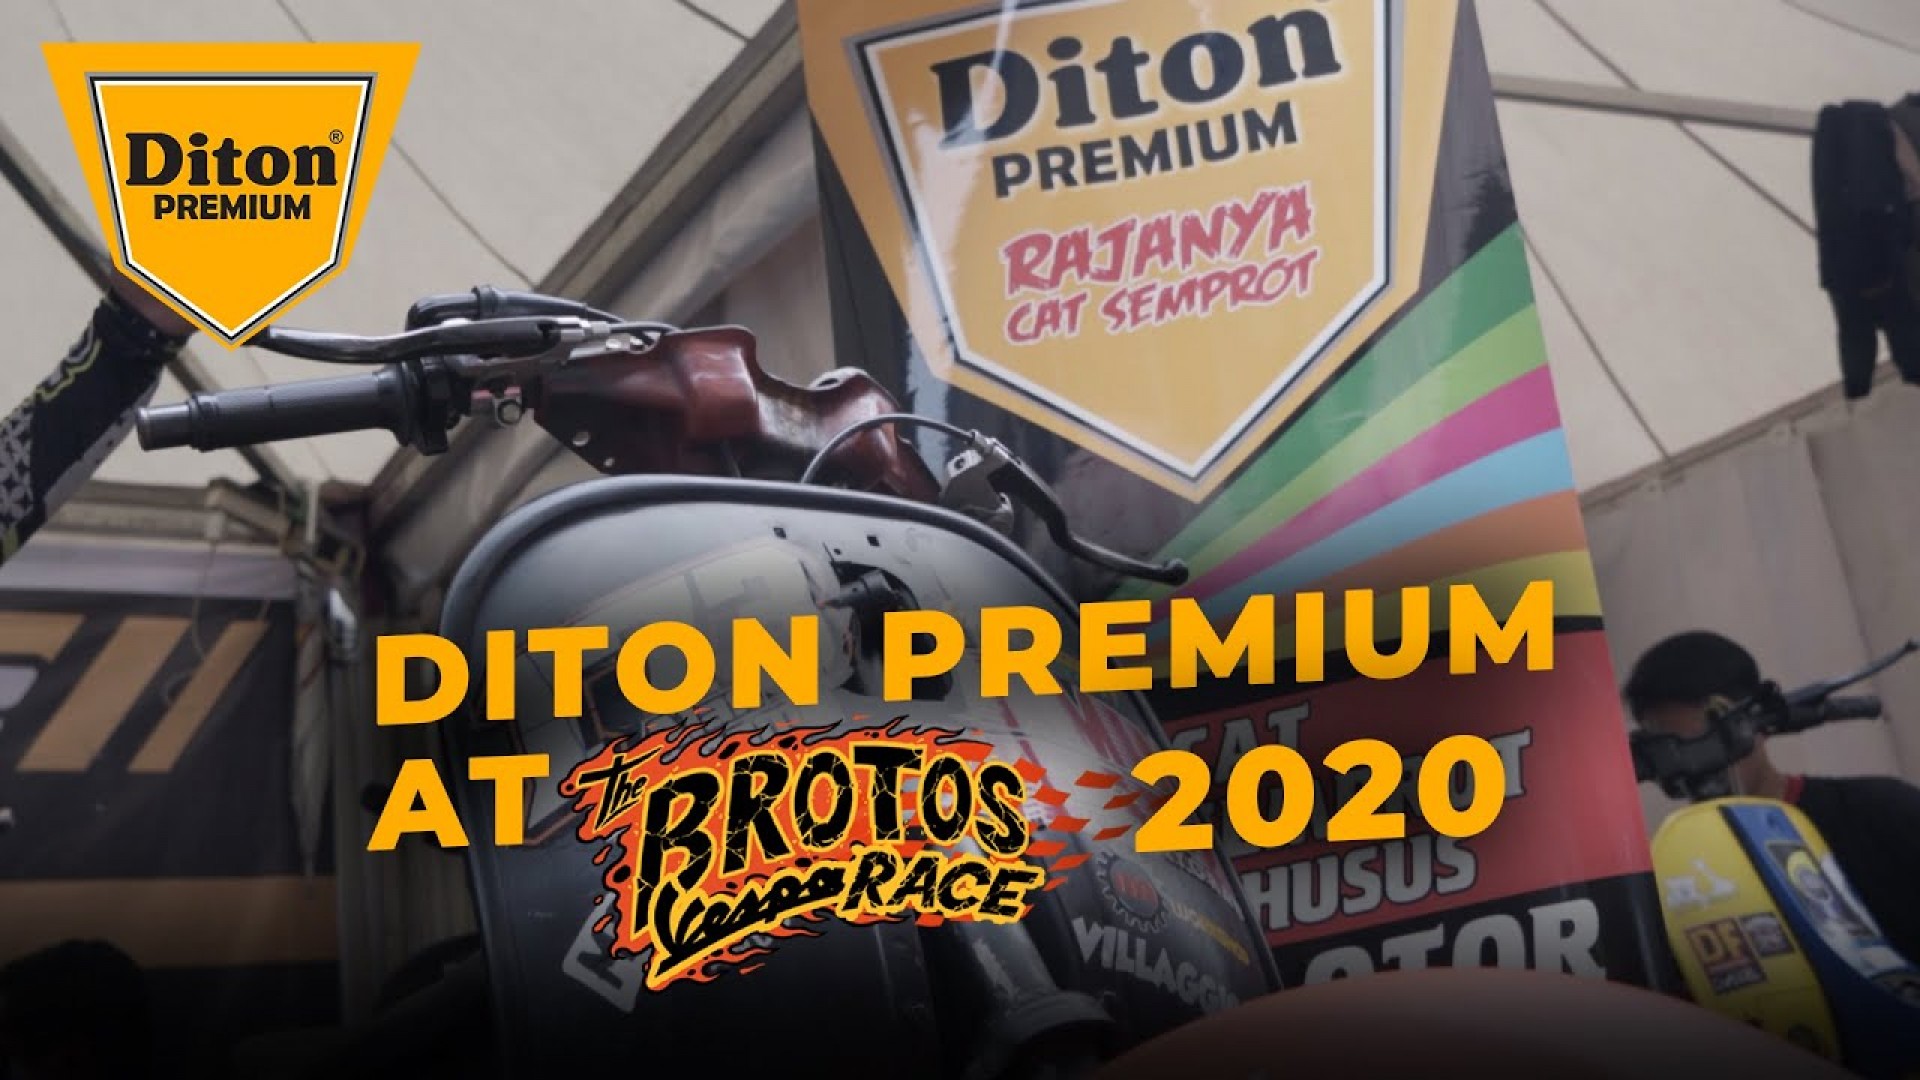 THE BROTOS VESPA RACE 2022 | DITON PREMIUM